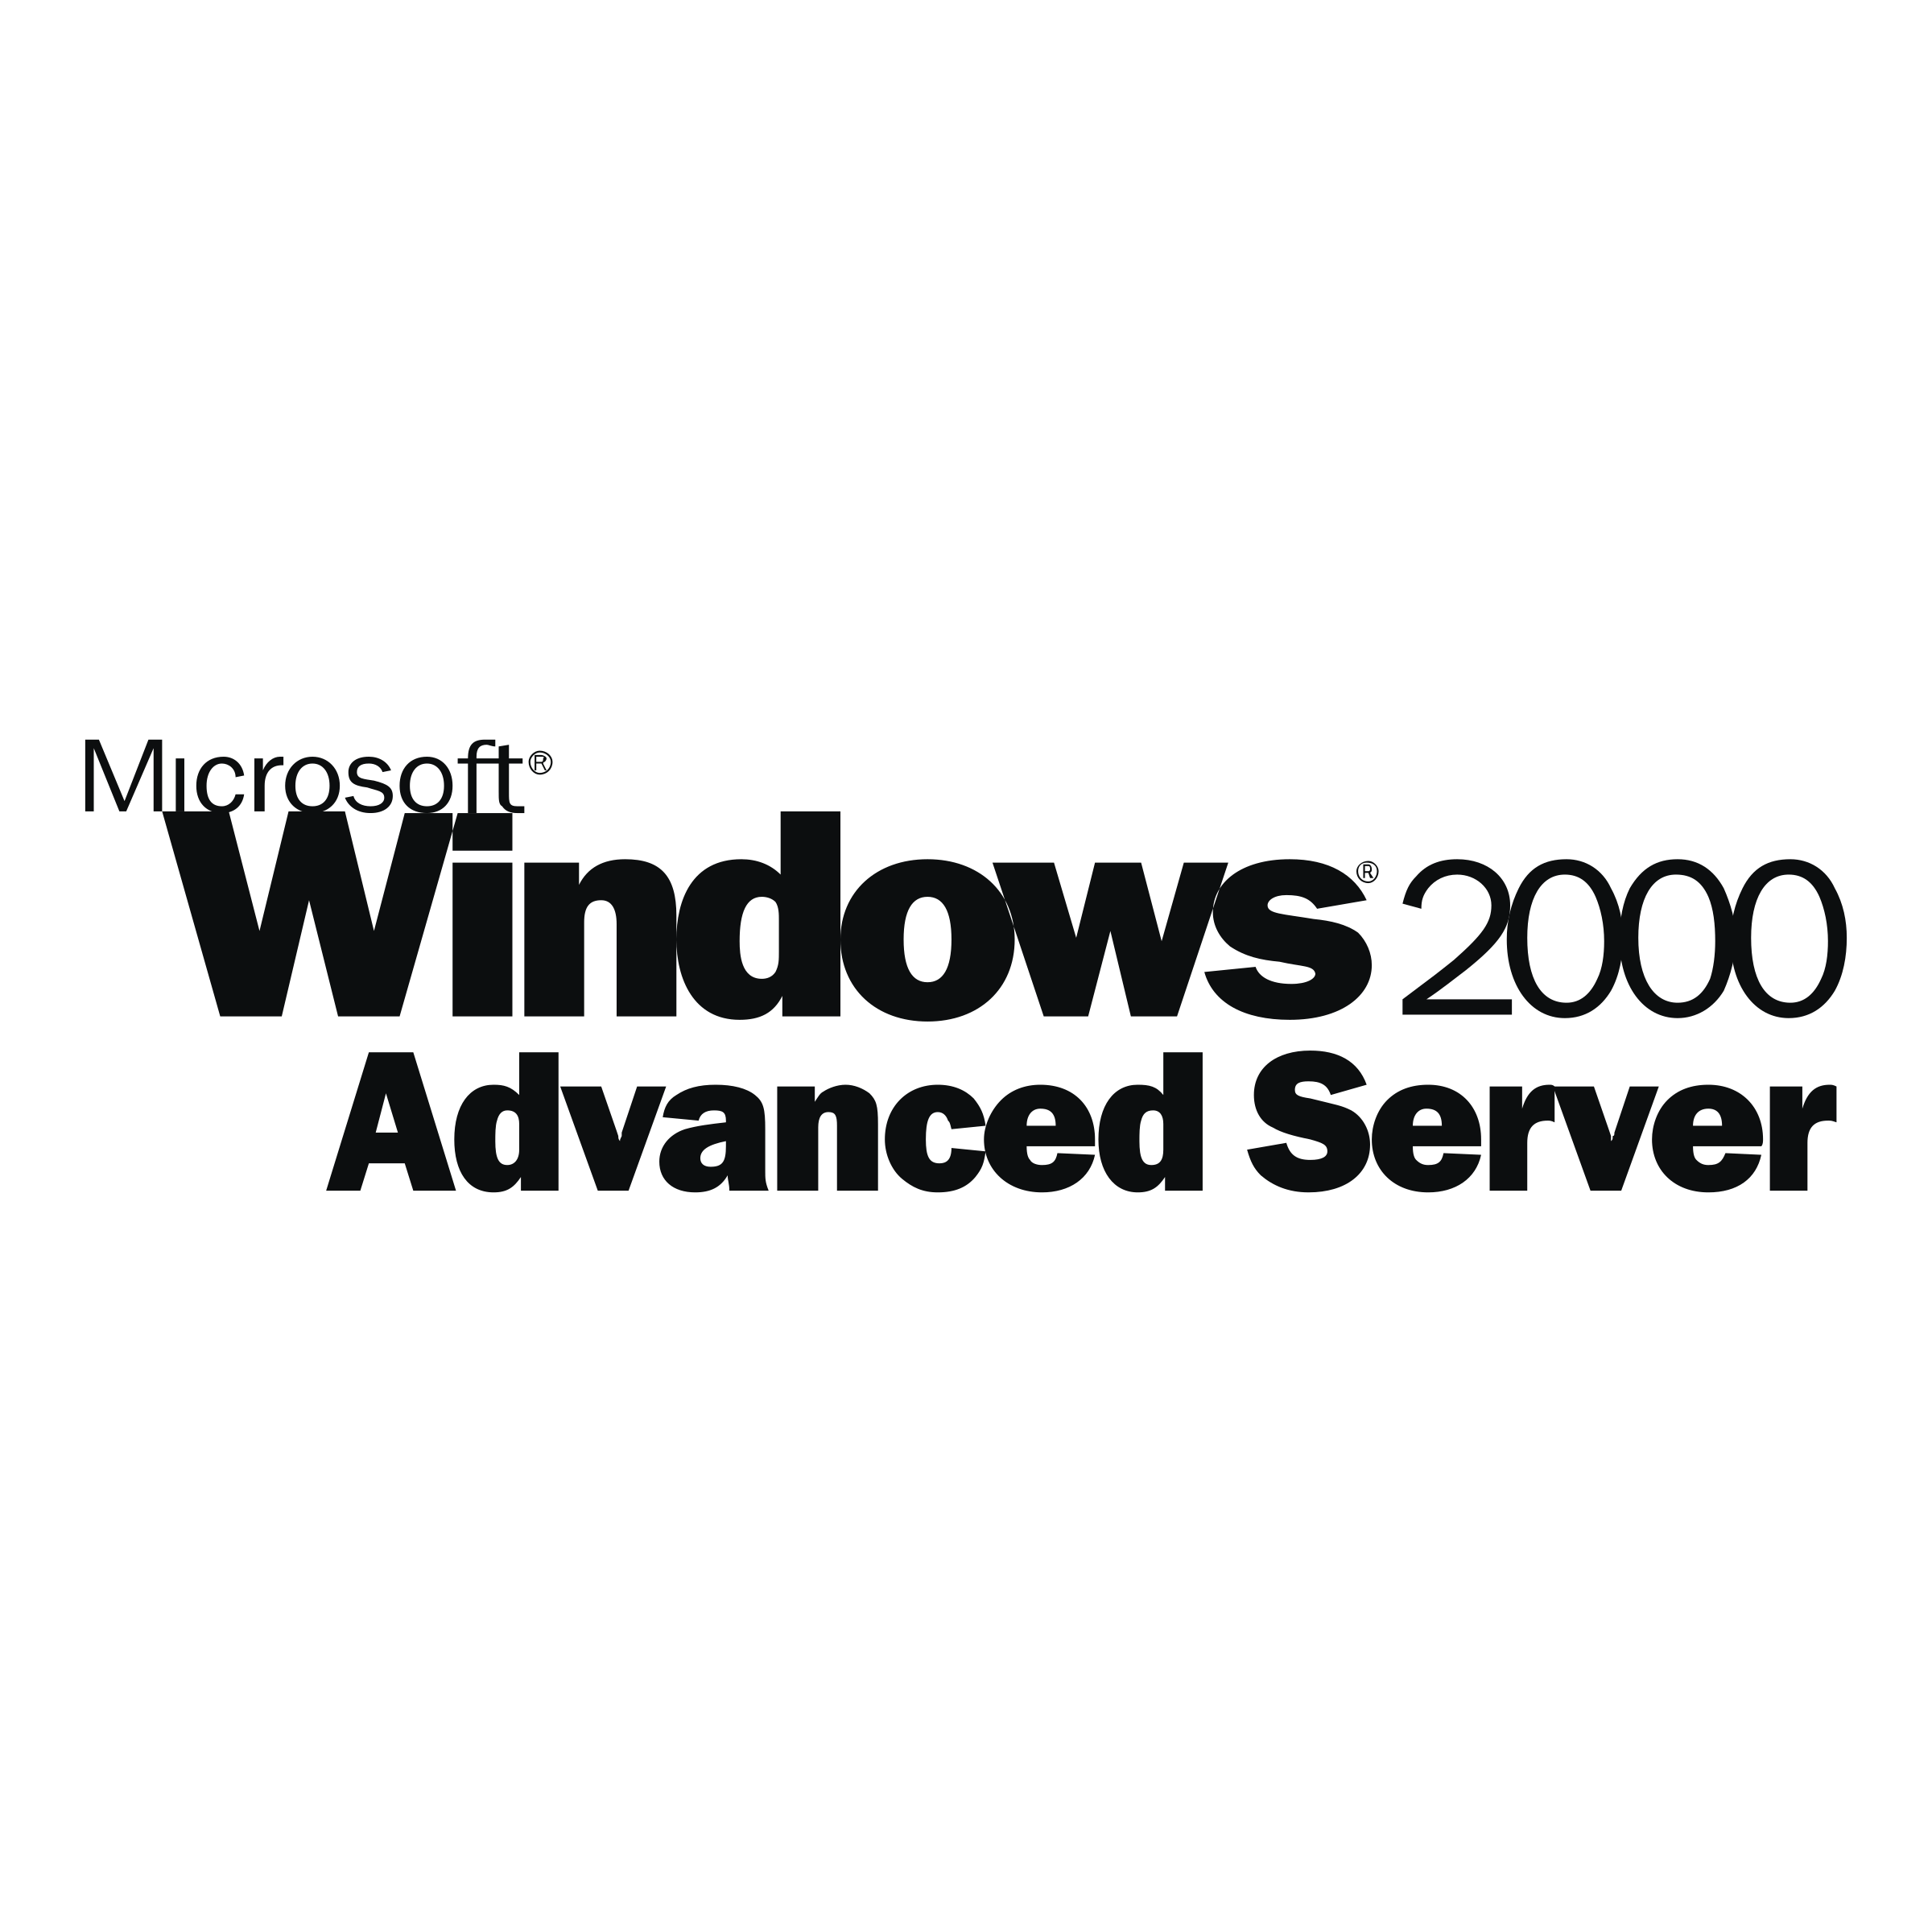 Black Server Logo - Microsoft Windows 2000 Advanced Server Logo PNG Transparent & SVG